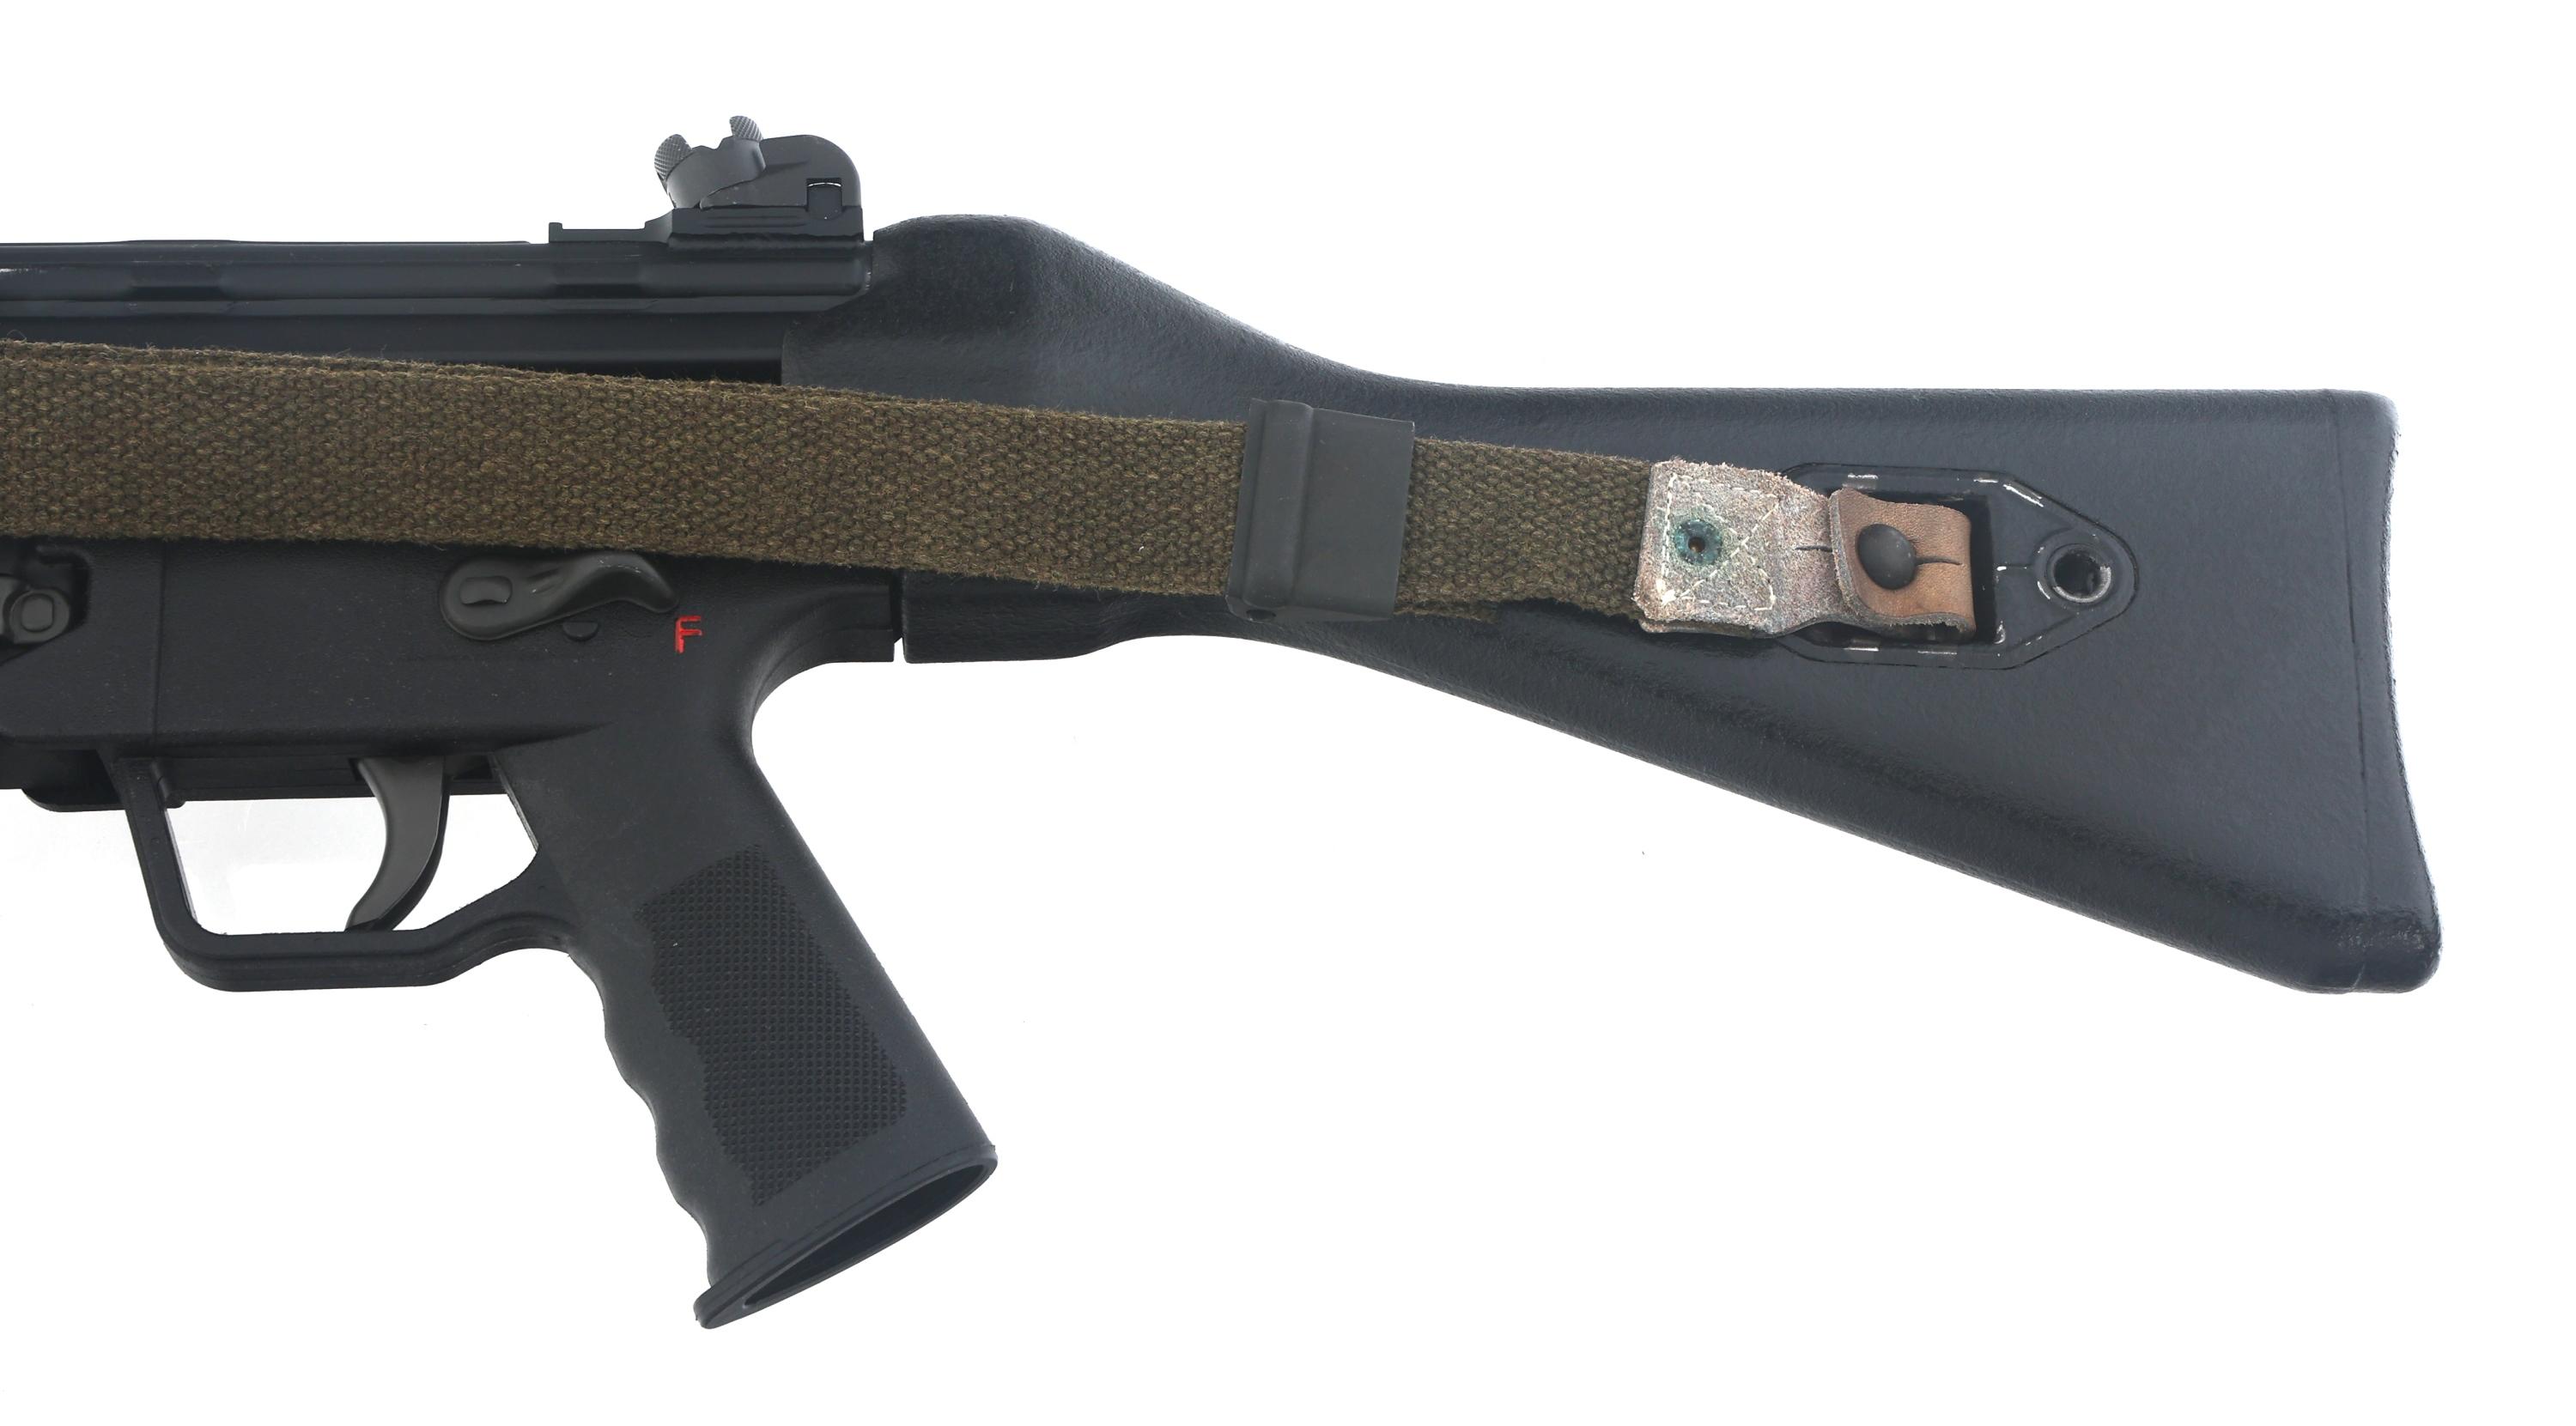 CENTURY ARMS MODEL C93 5.56mm CALIBER RIFLE